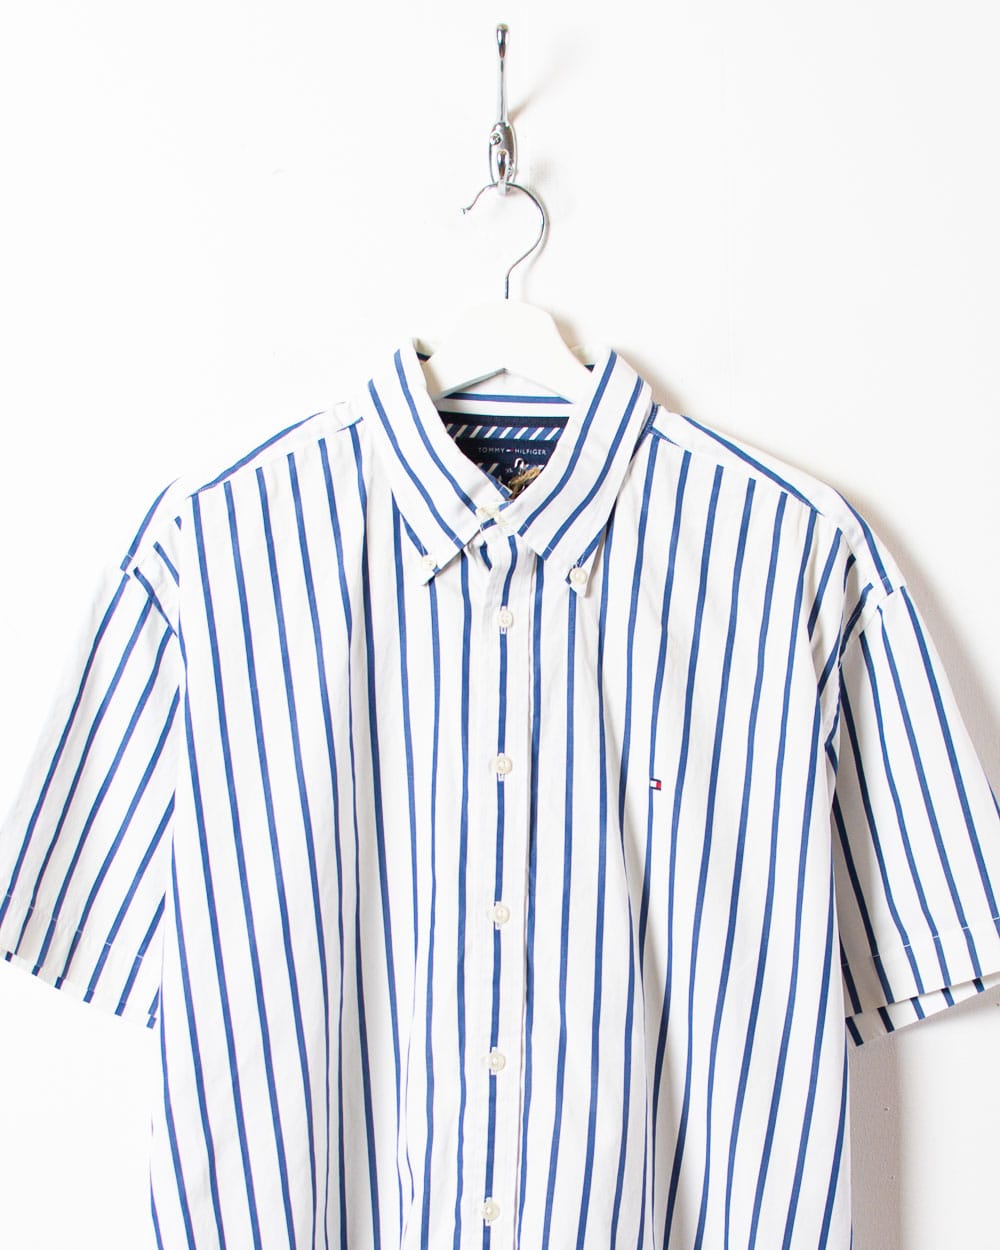 White Tommy Hilfiger Striped Short Sleeved Shirt - X-Large